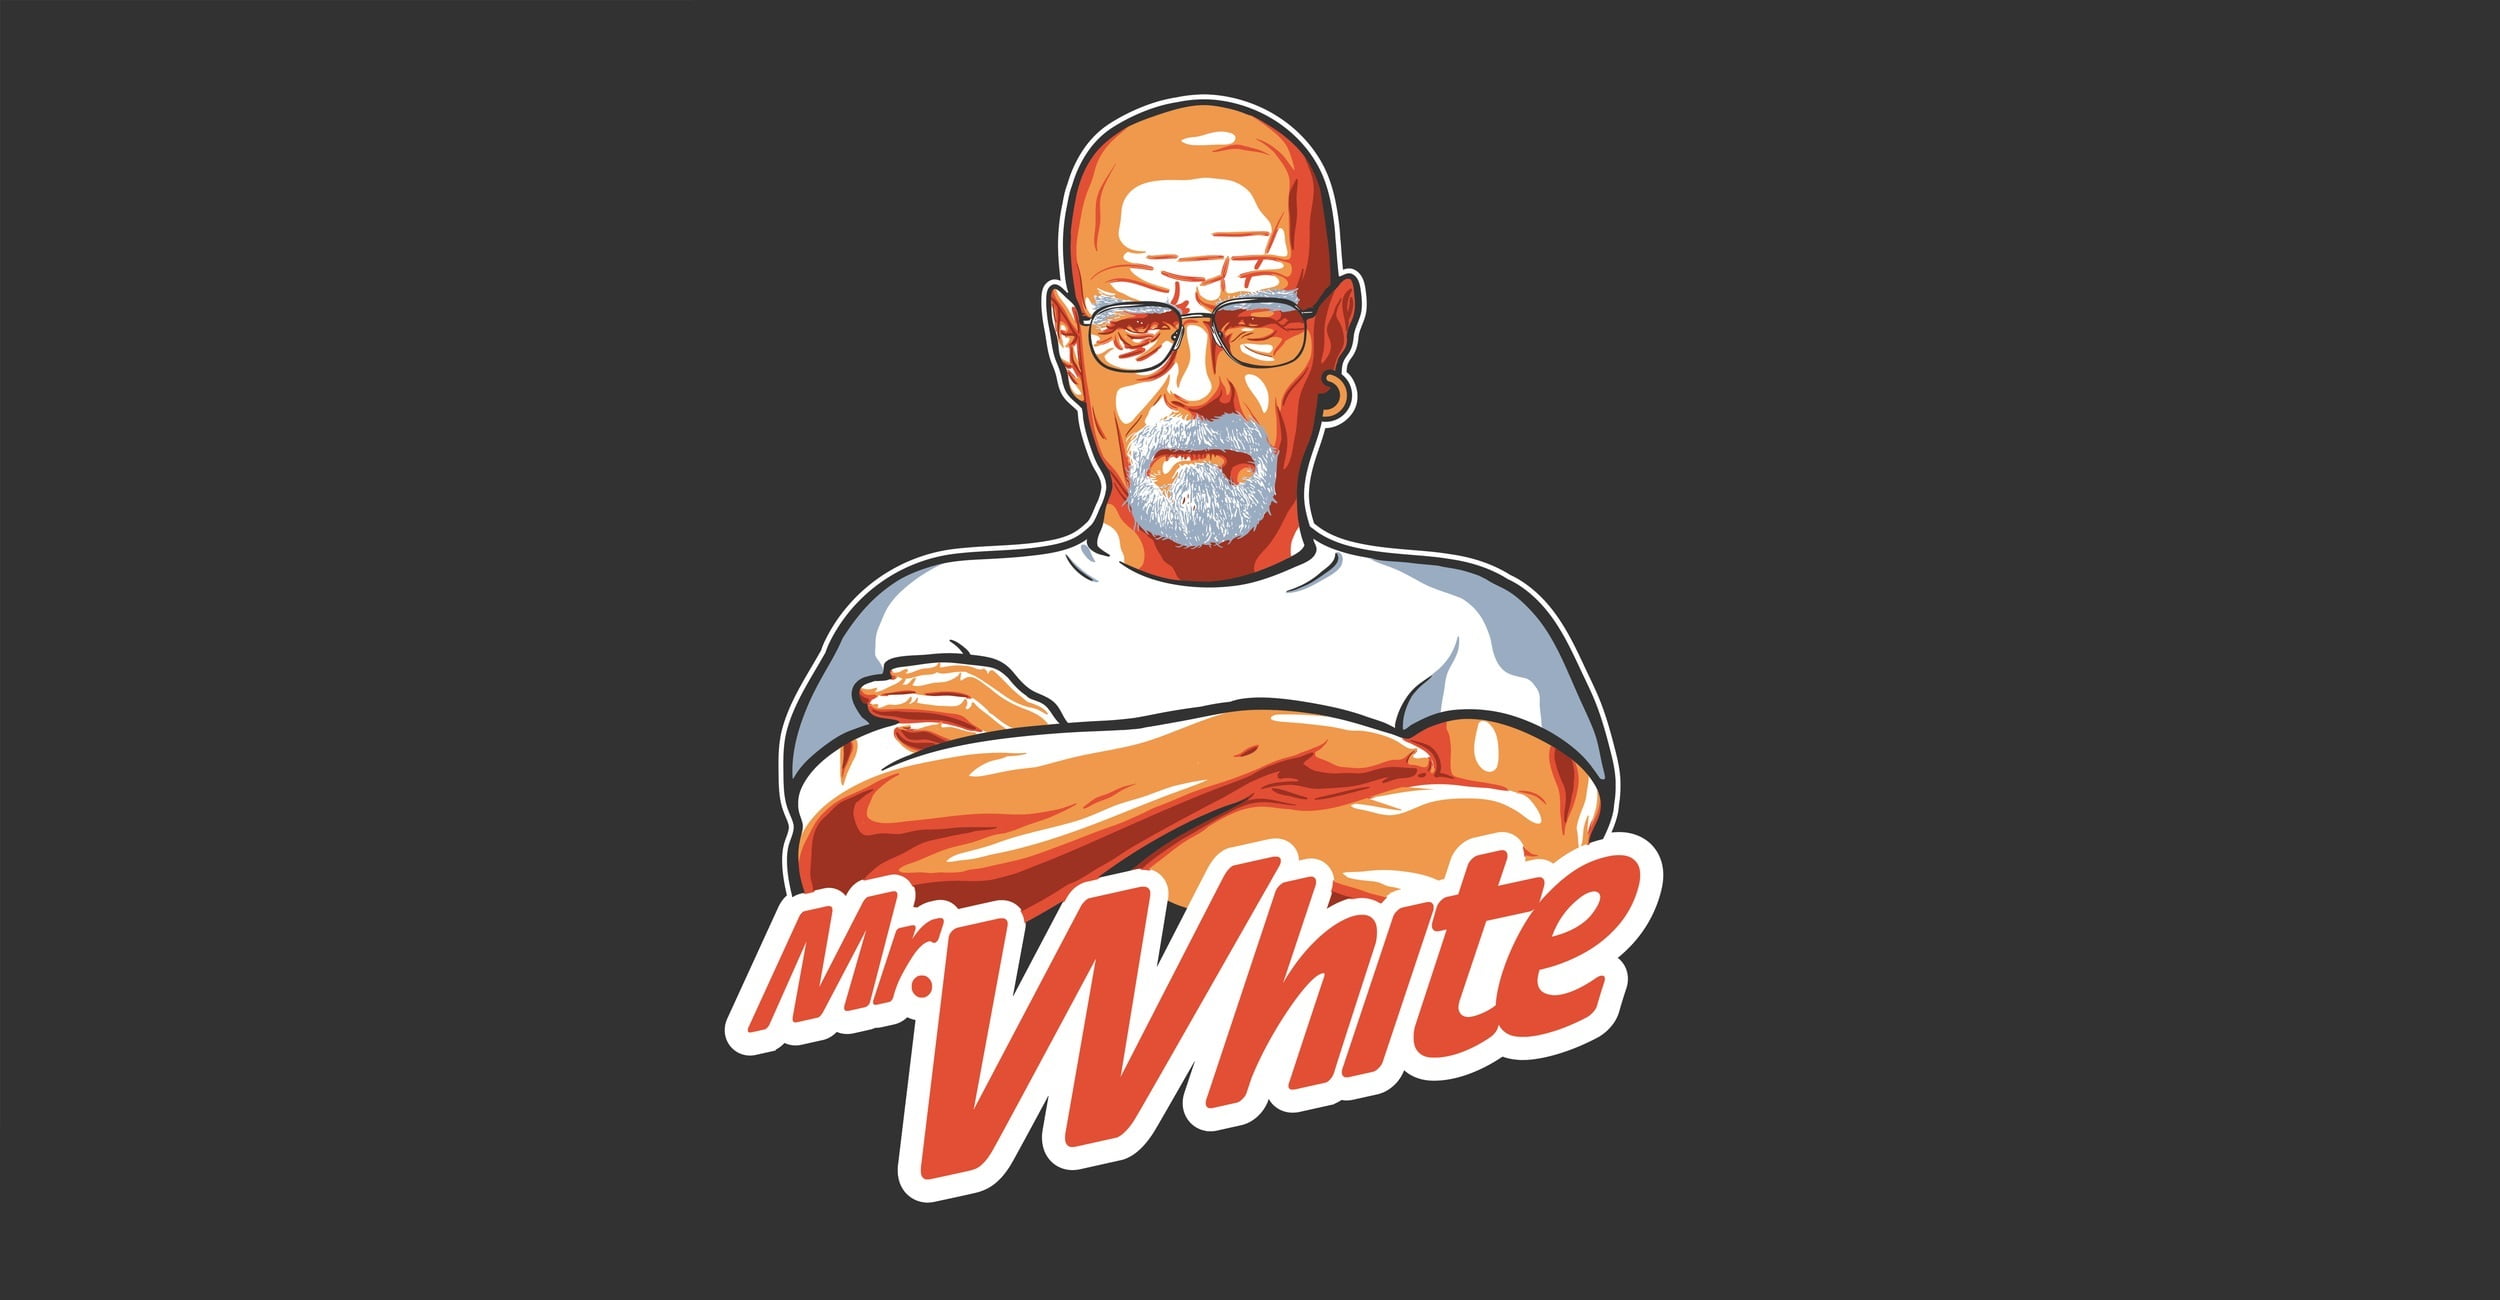 Mr. White logo, Minimalism, Humor, Art, Breaking Bad, Bryan Cranston